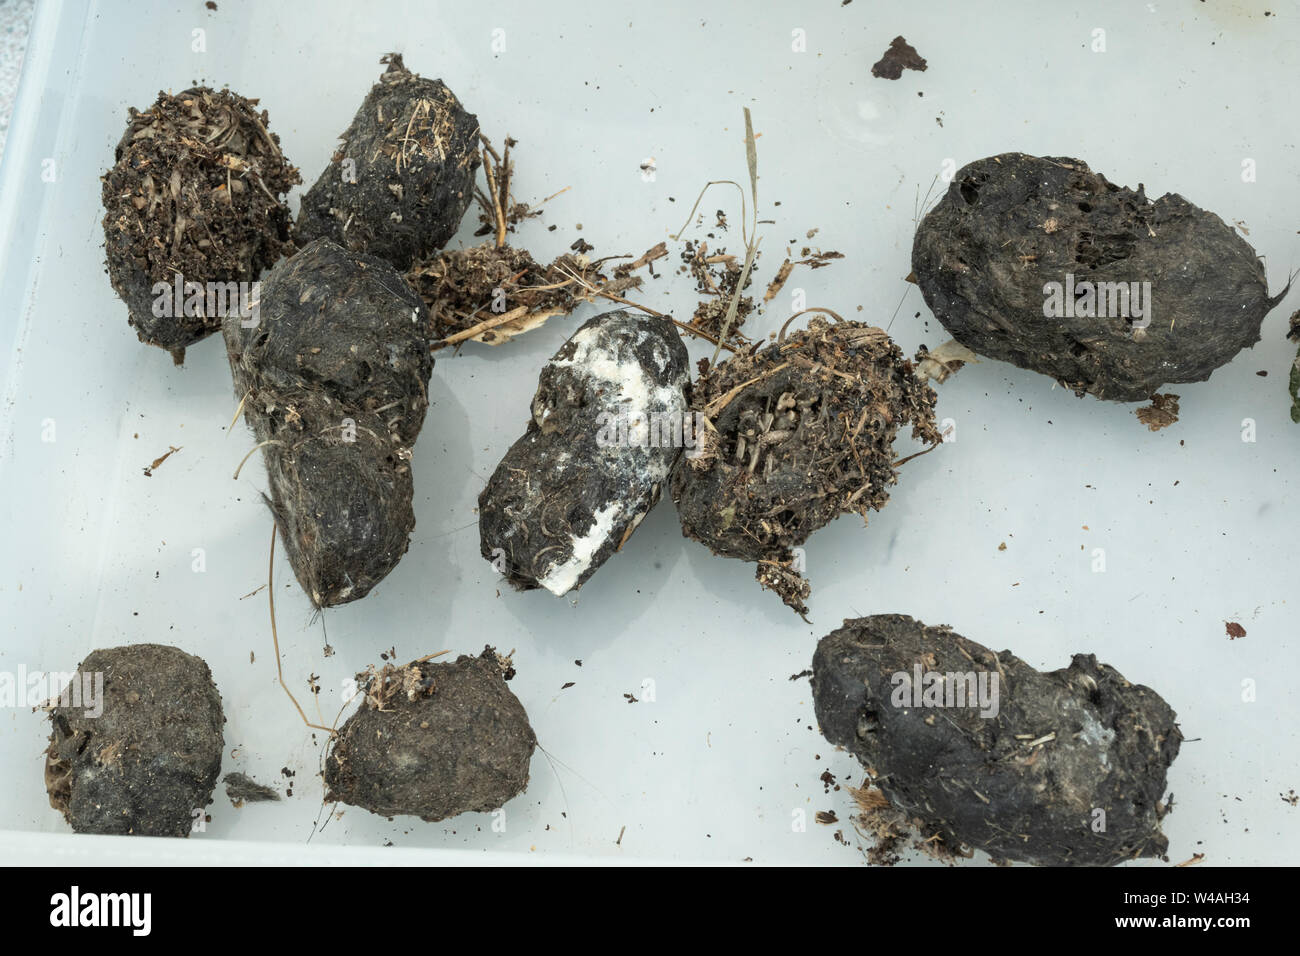 Barn owl (Tyto alba) pellets collected for a bioblitz event, UK Stock Photo